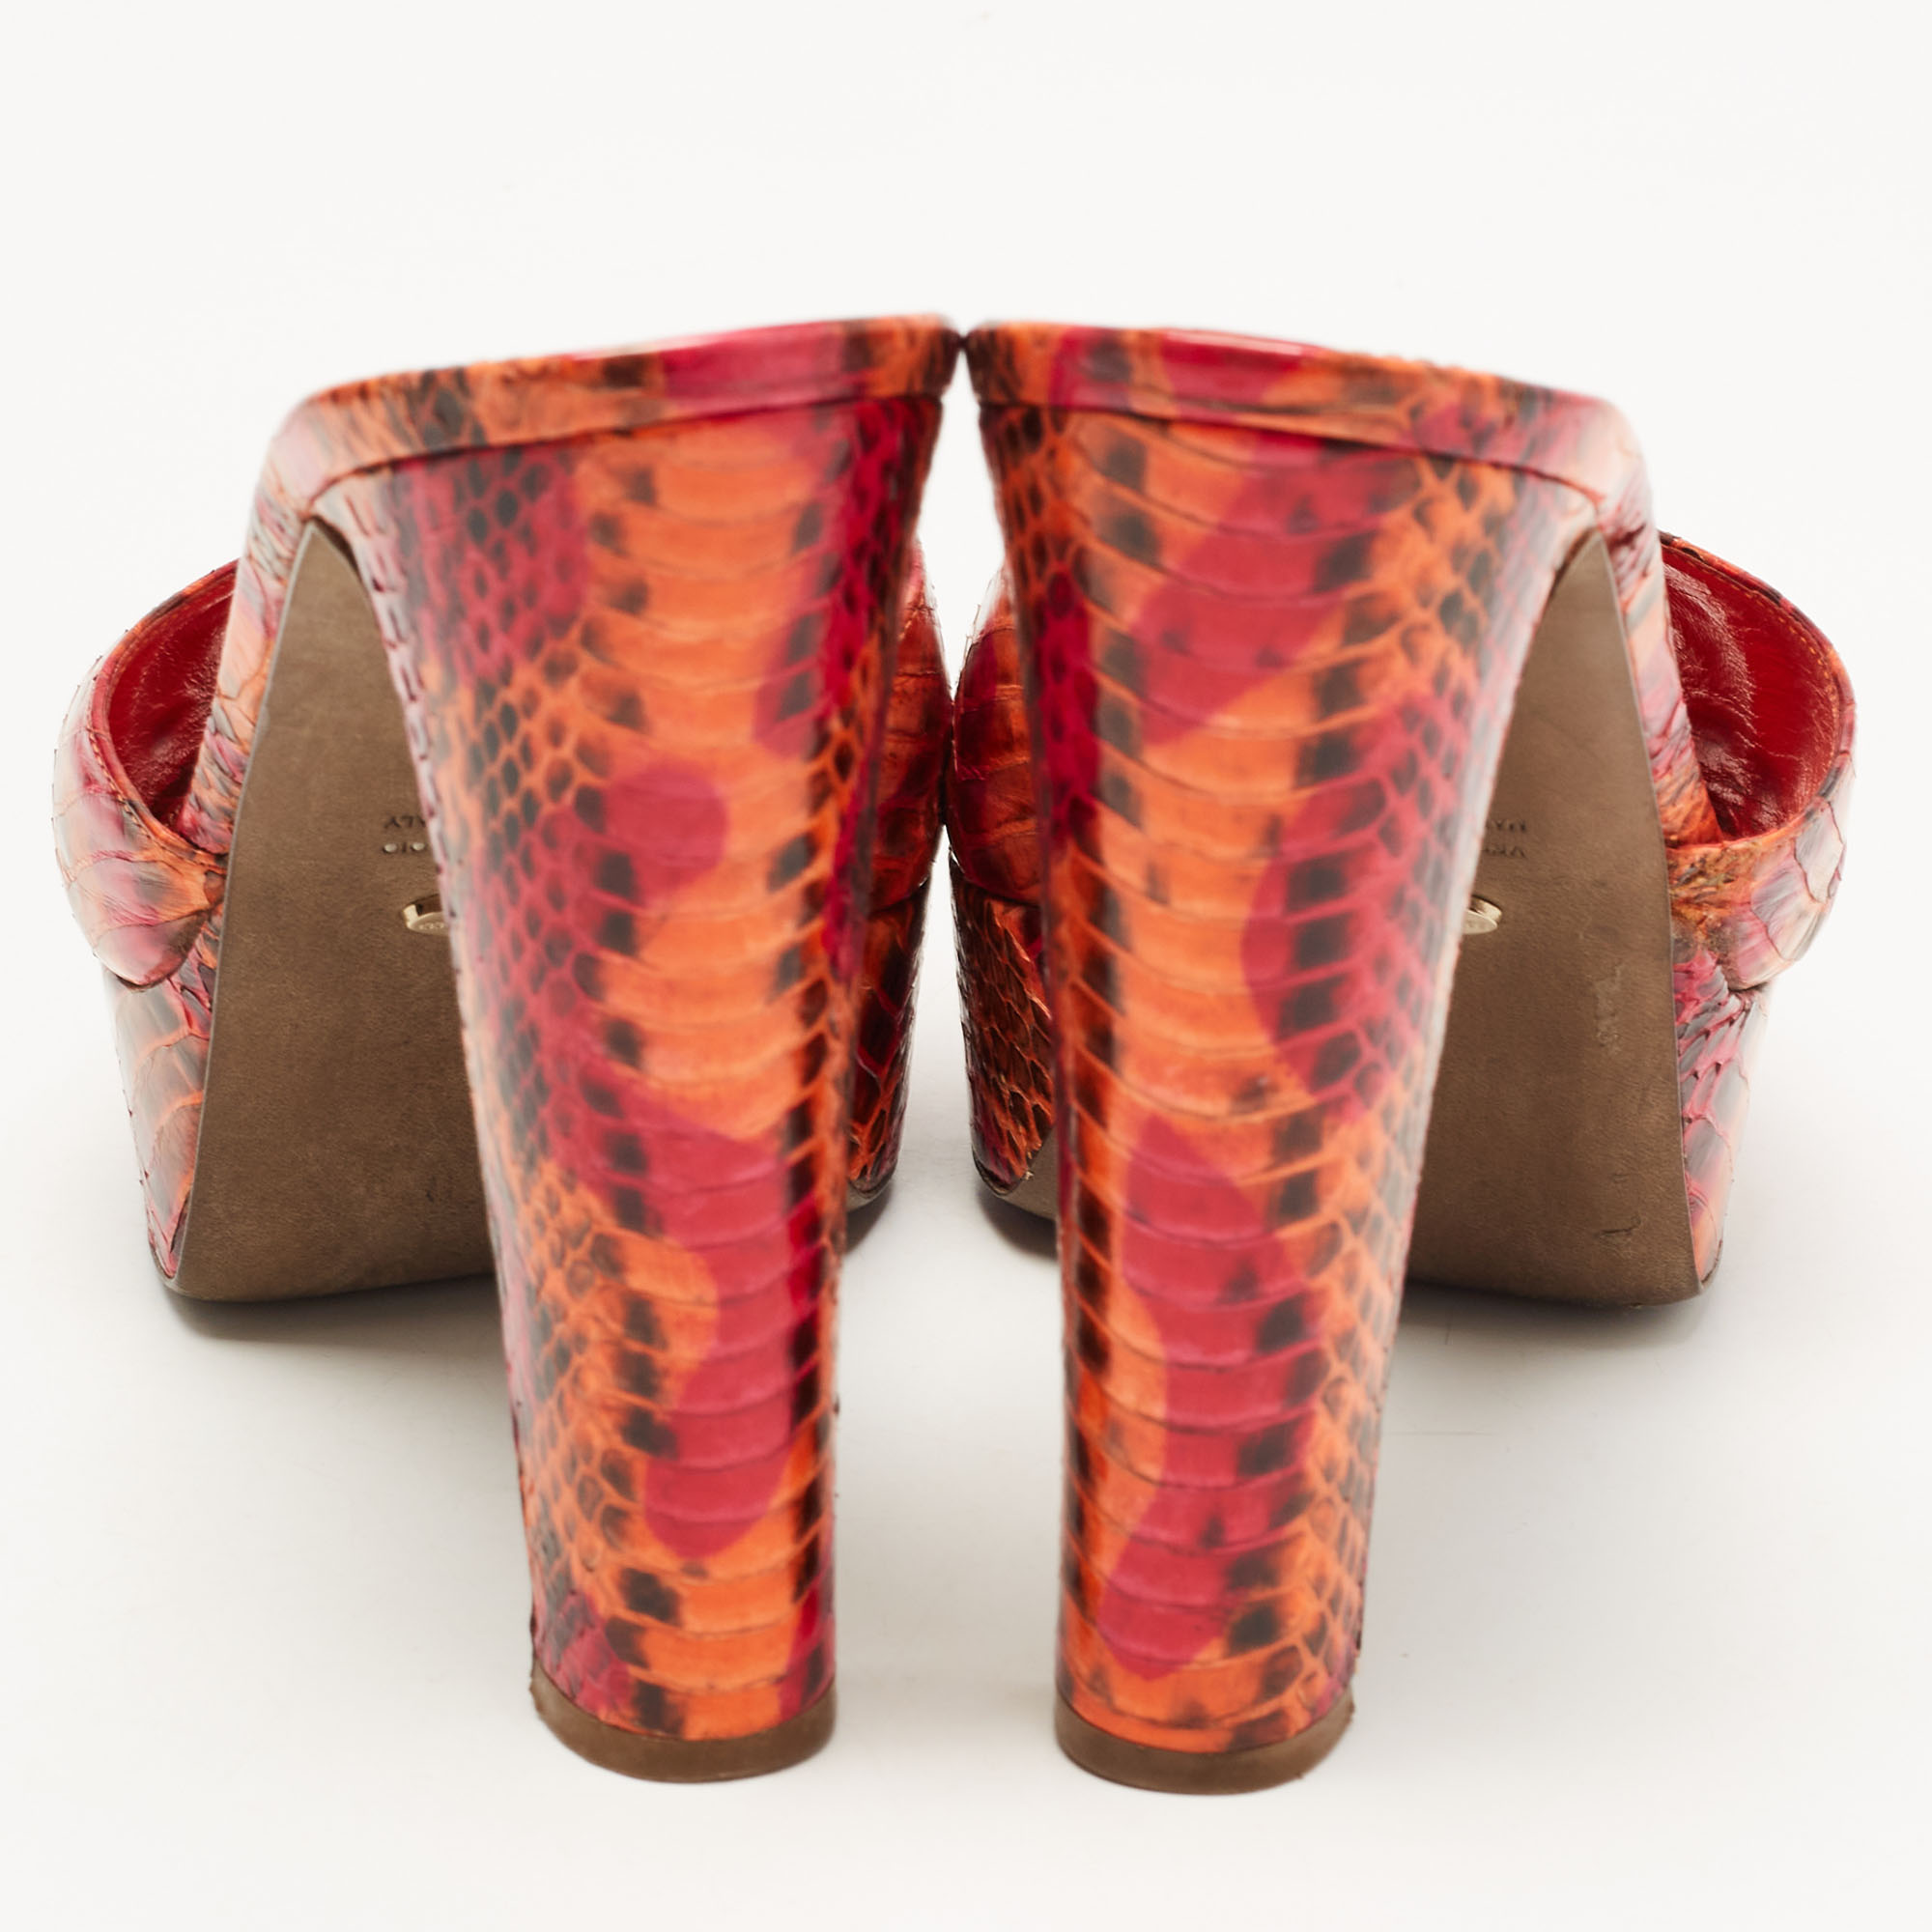 Sergio Rossi Orange/Pink Watersnake Leather Platform Slide Sandals Size 41